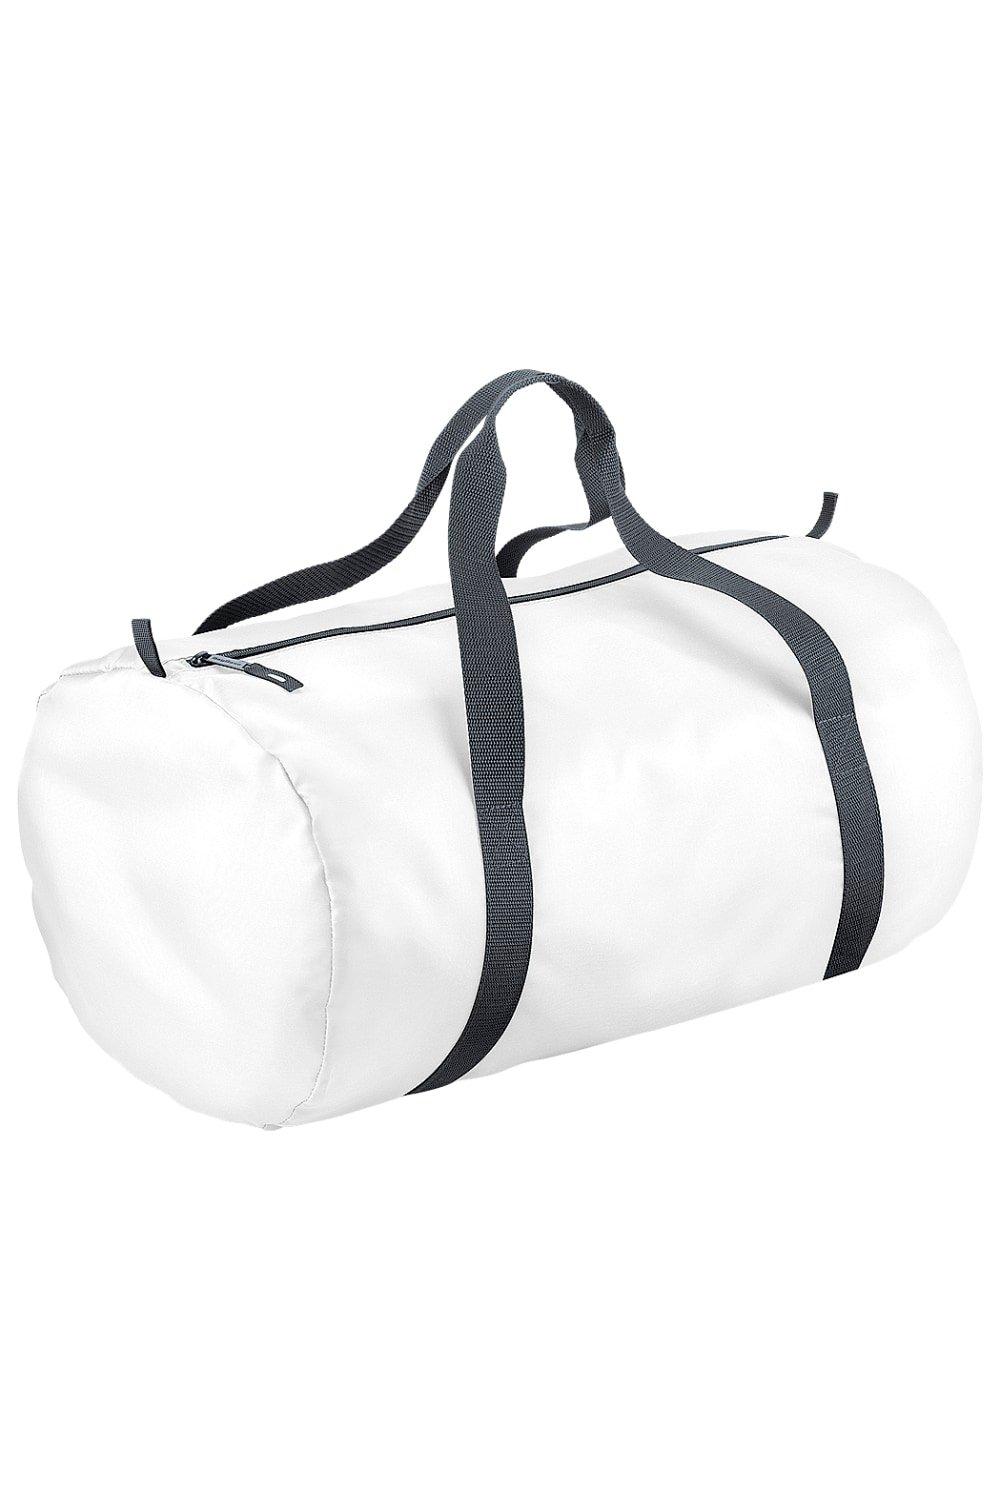 Водонепроницаемая дорожная сумка Packaway Barrel Bag / Duffle (32 литра) Bagbase, белый